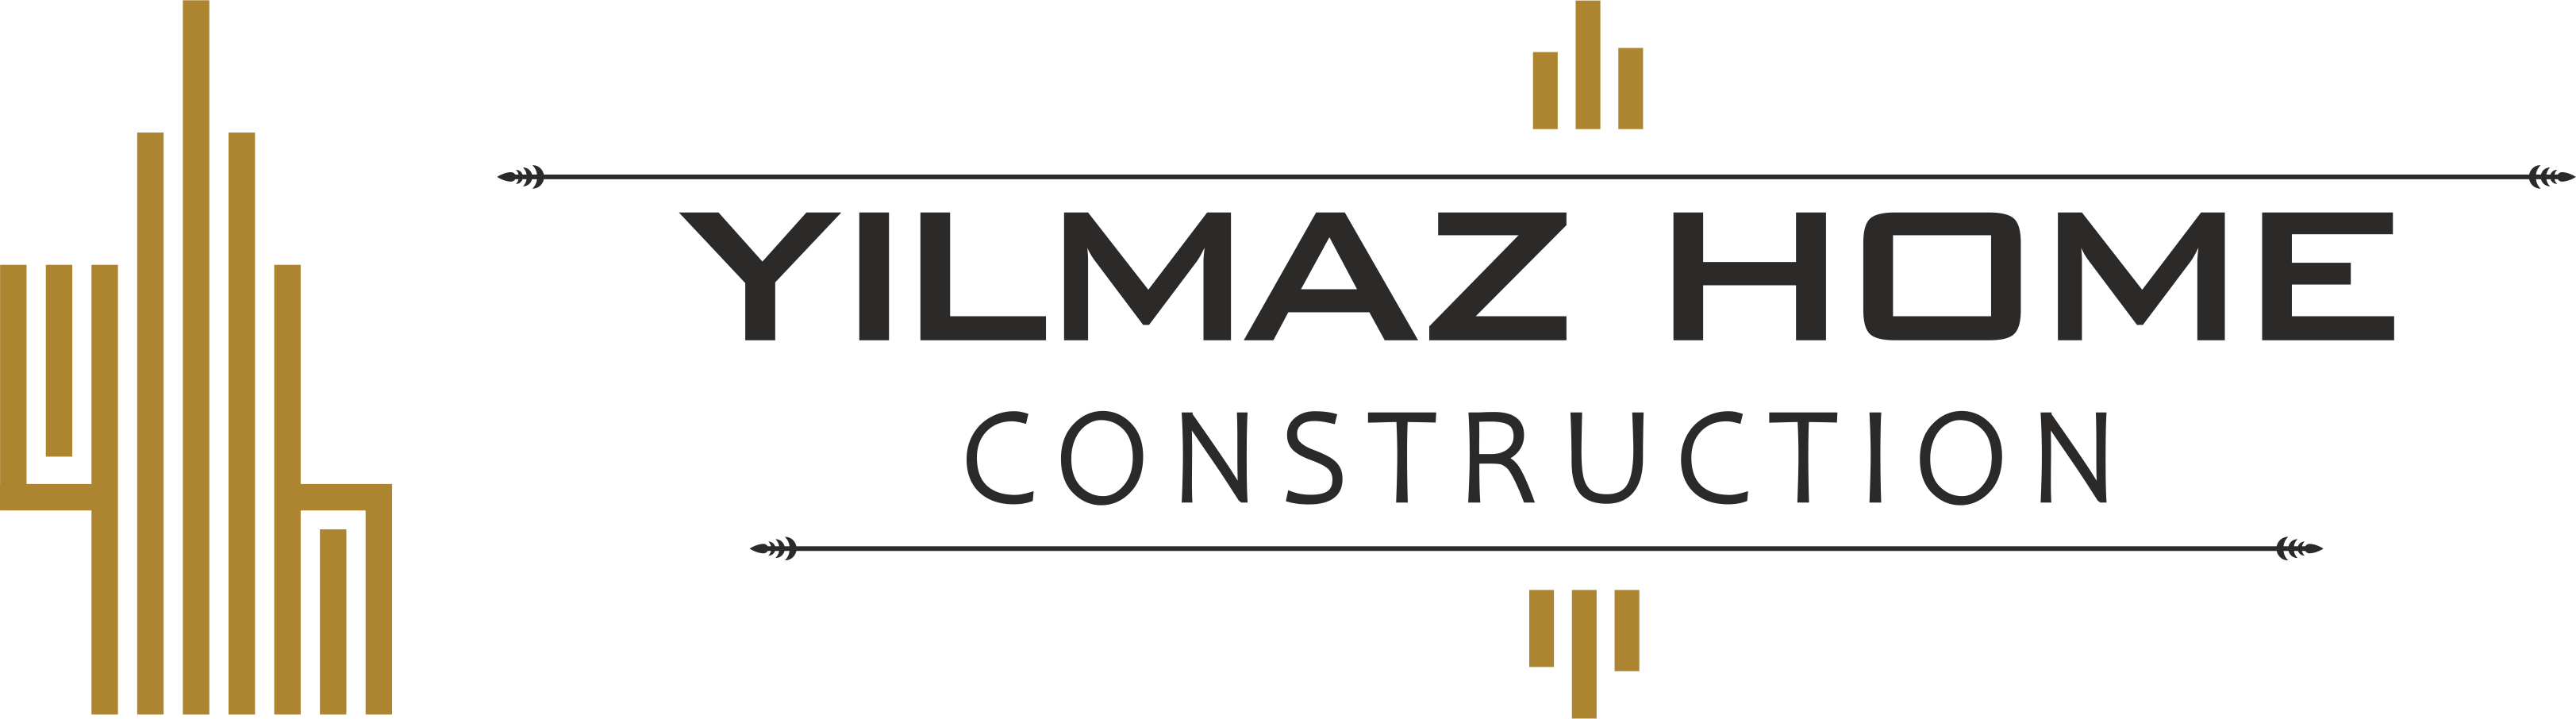 Yilmaz Home Construction